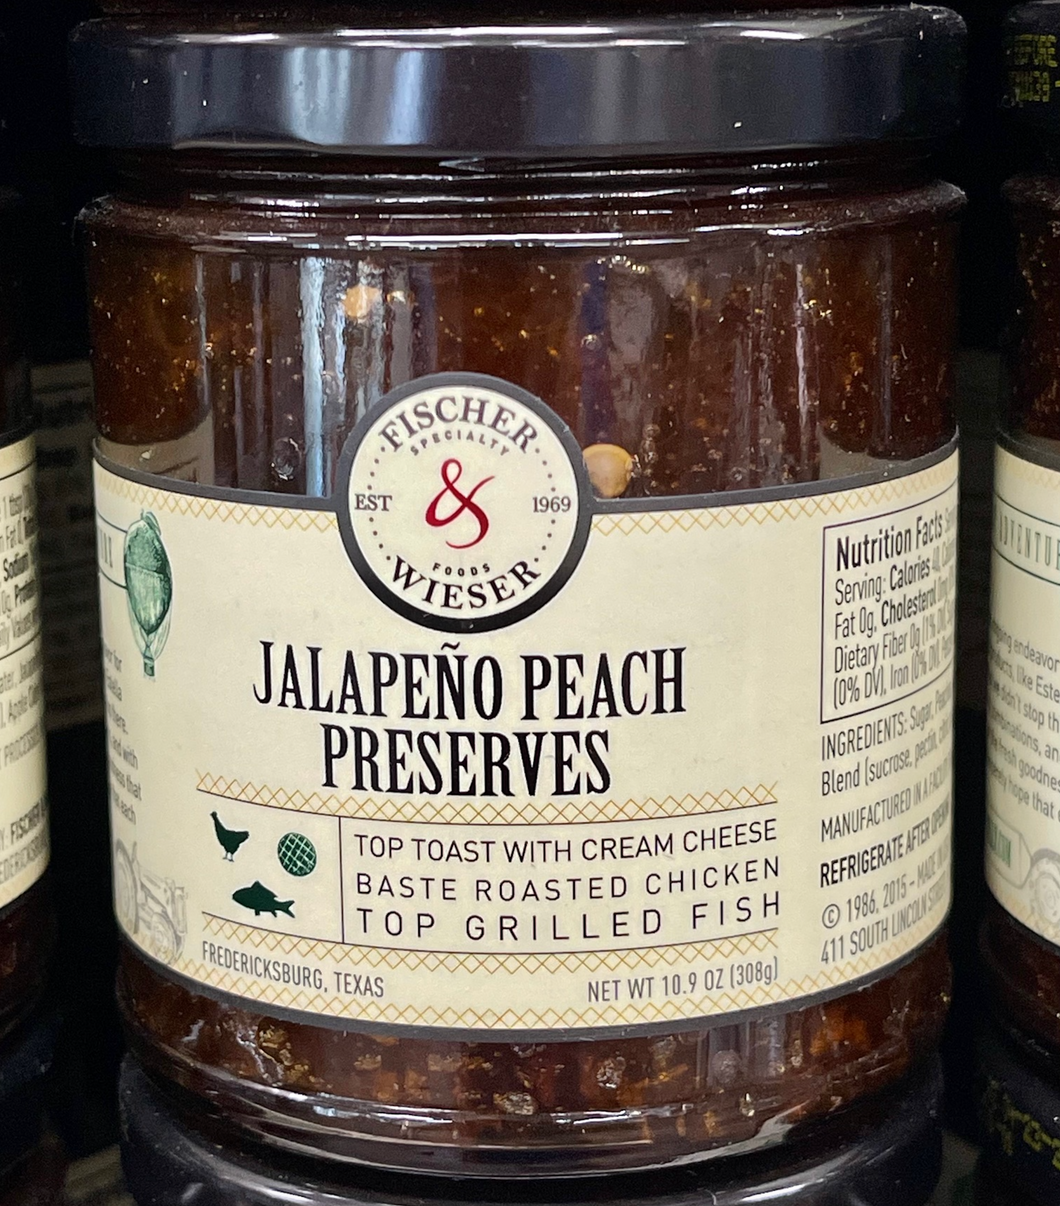 Jalapeño Peach Preserves